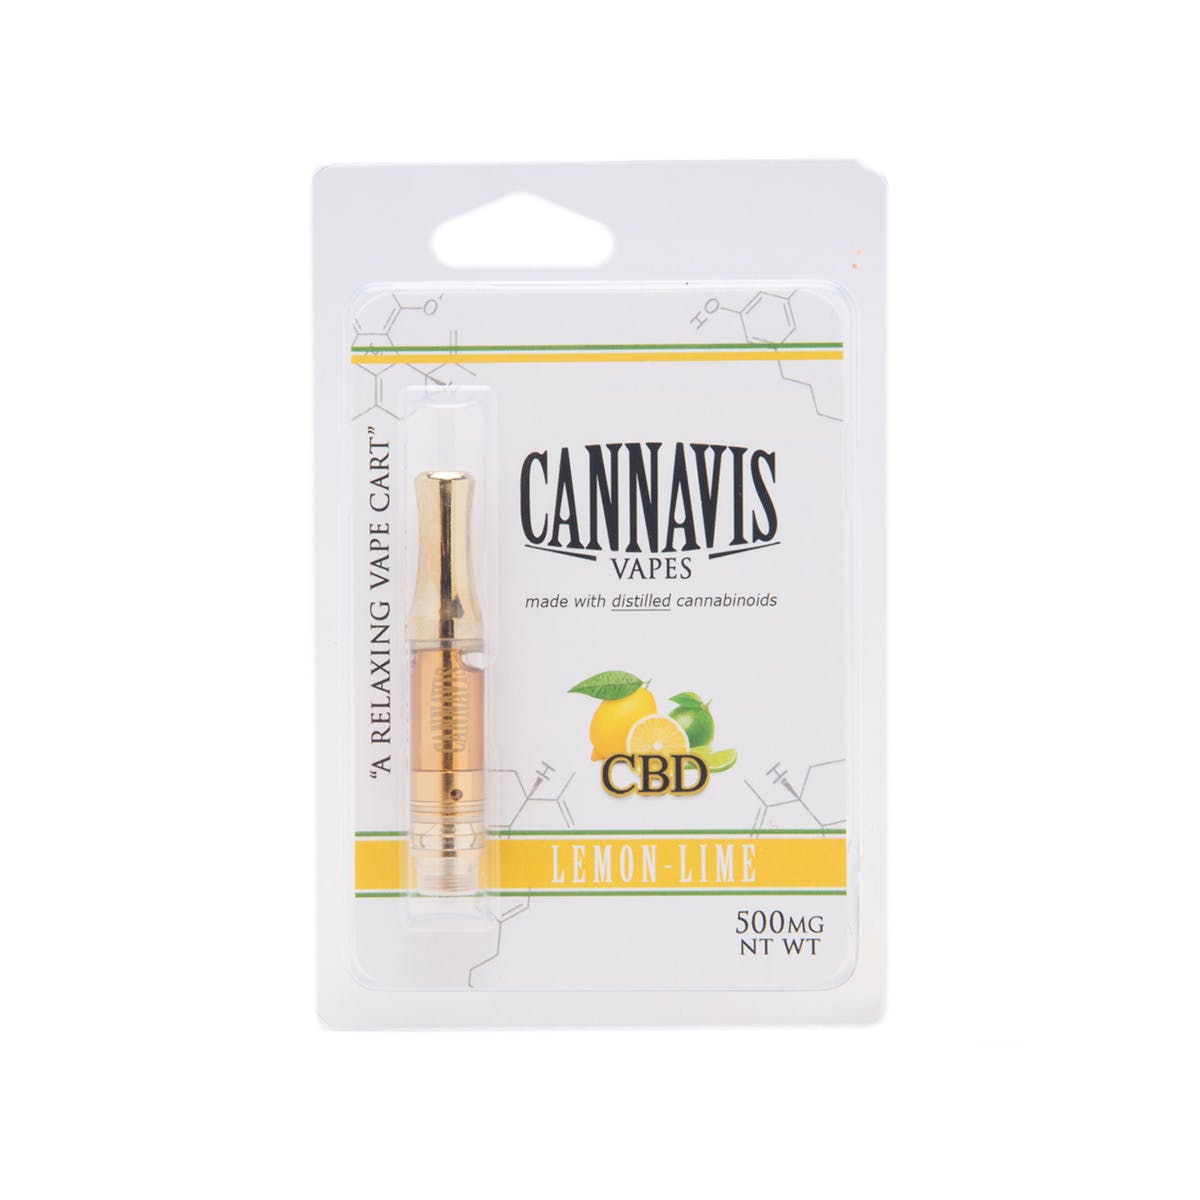 Cannavis Vape, Lemon-Lime CBD Cartridge